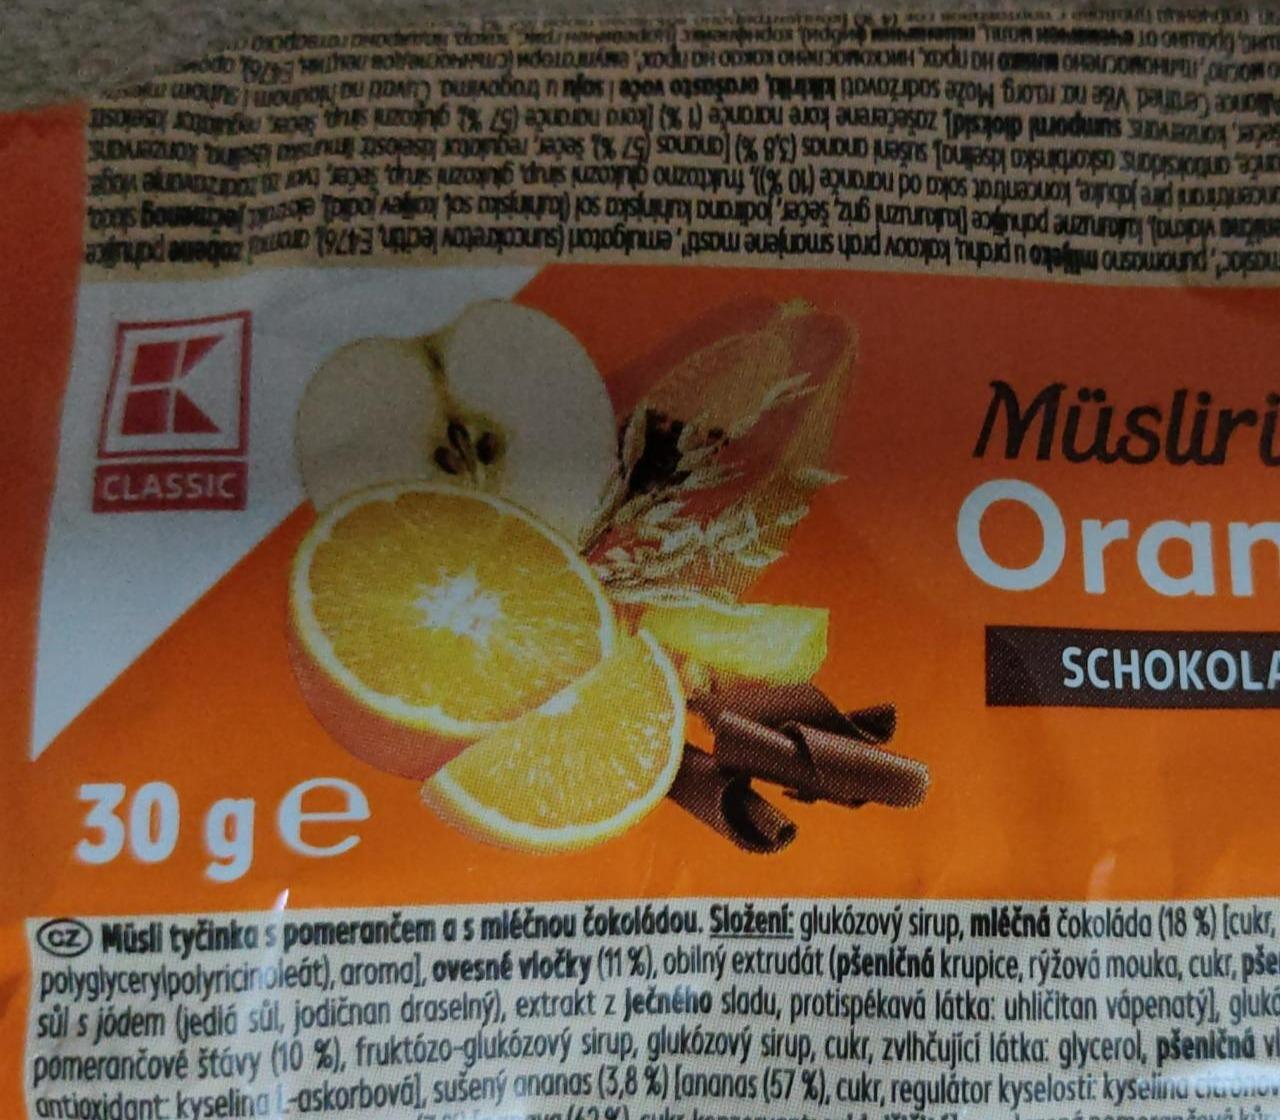 Fotografie - Müsli riegel Orange Schokolade K-Classic